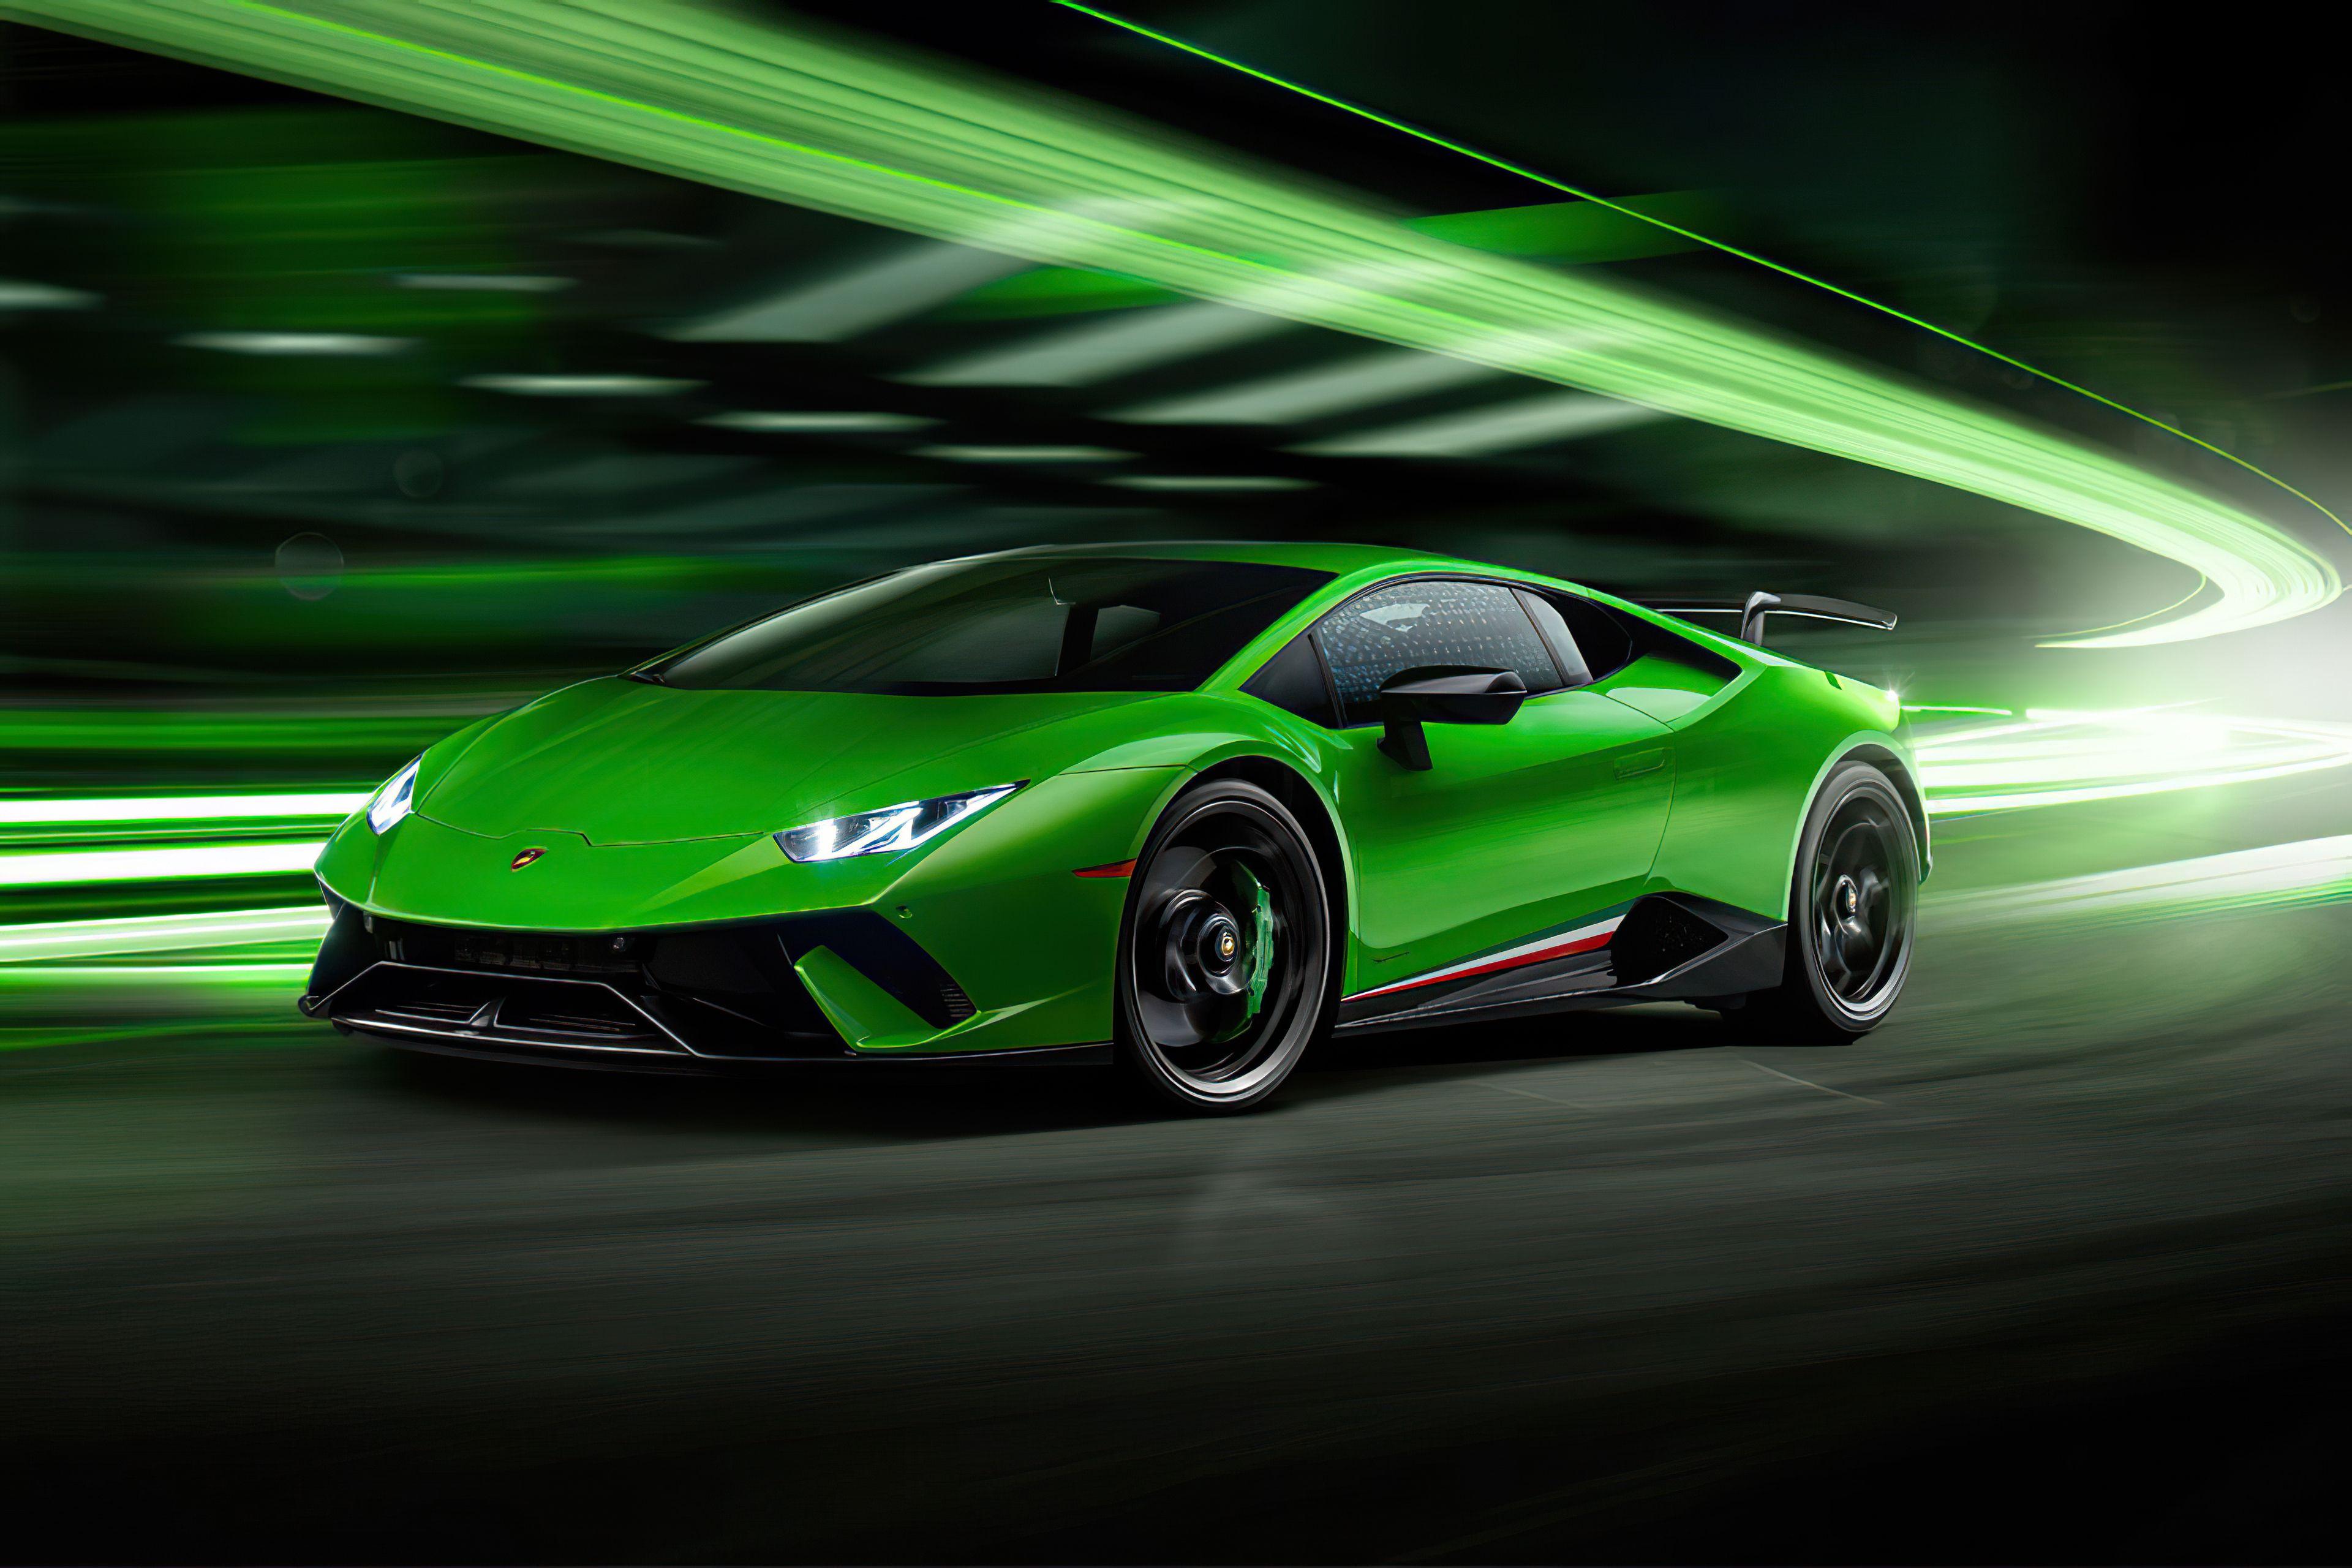 Cool Green Lamborghini Wallpapers - Top Free Cool Green ...